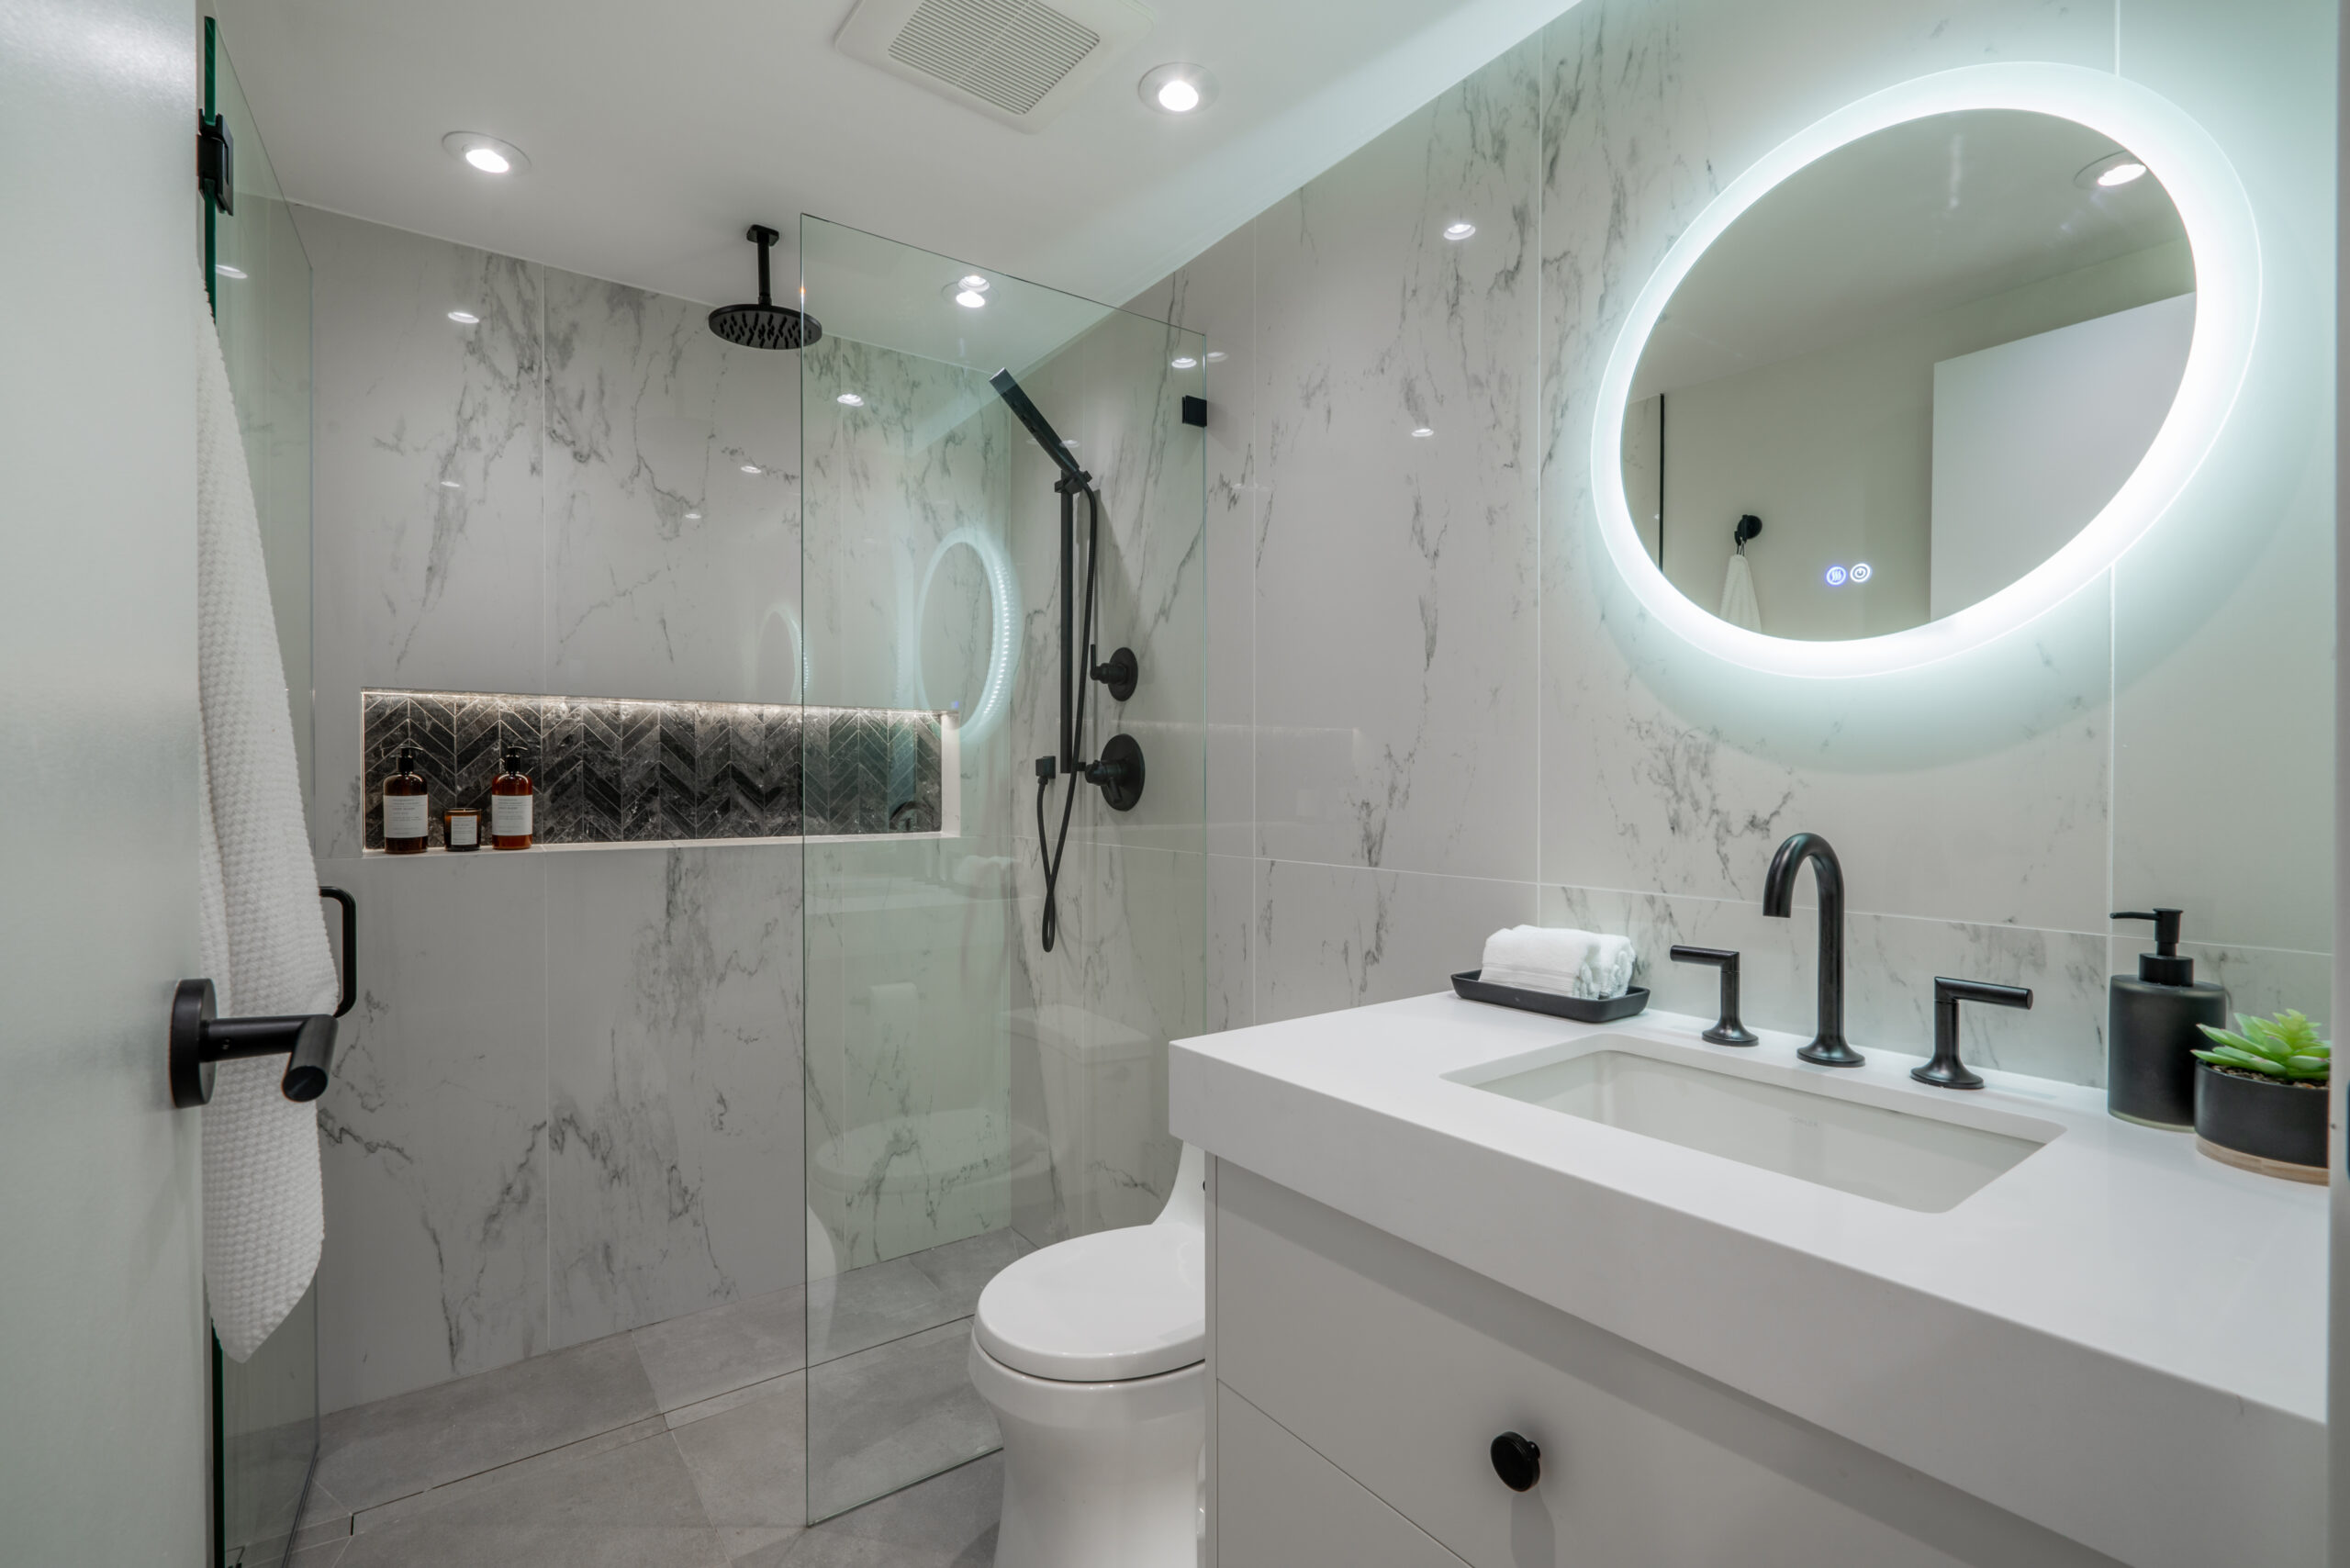 bathroom-renovation-vancouver-downtown-white-tiles-niche-vanity-black-fixtures